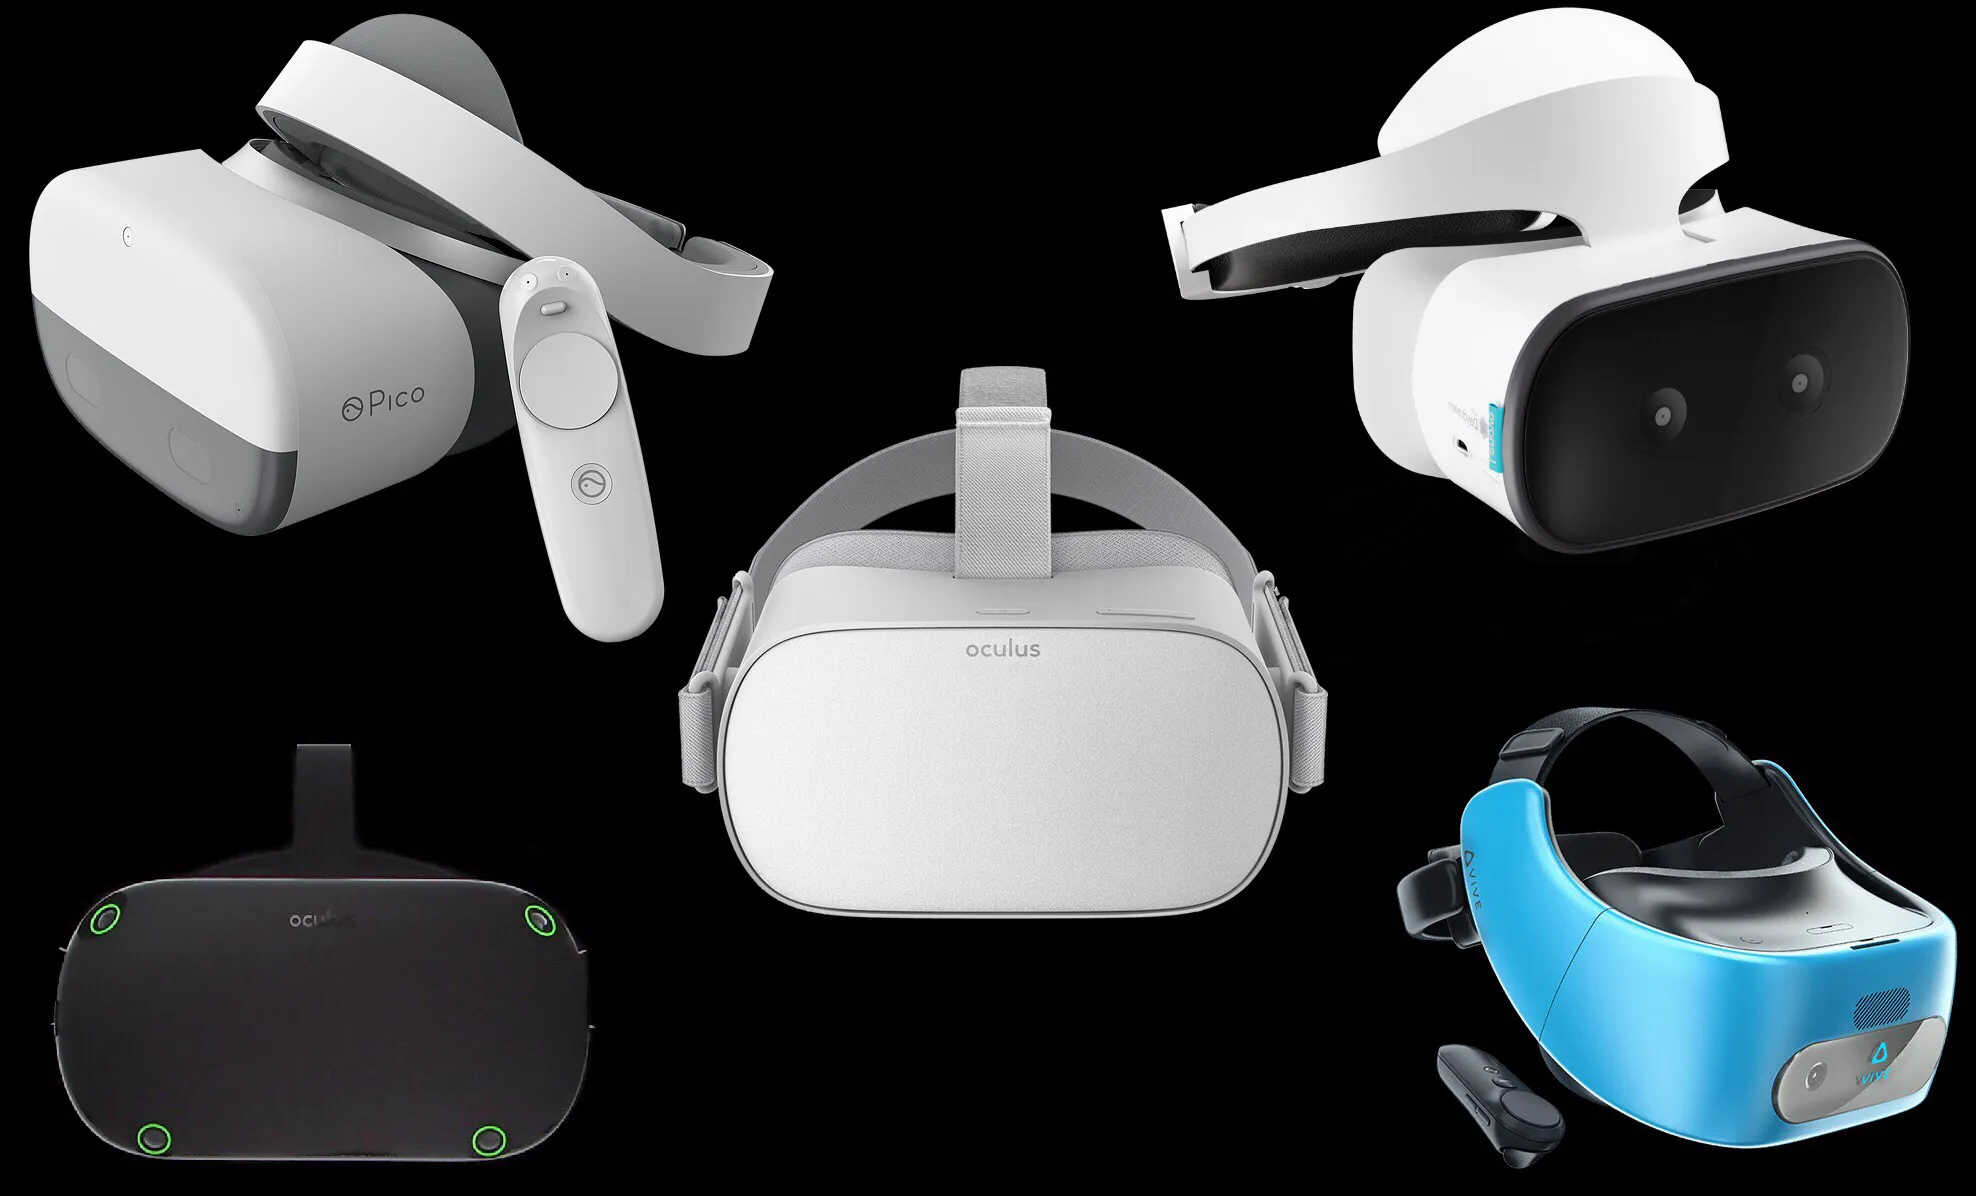 Vr очки oculus 3. Виар очки Pico. Очки виртуальной реальности Окулус. Standalone VR-шлемы. ВР очки Oculus.